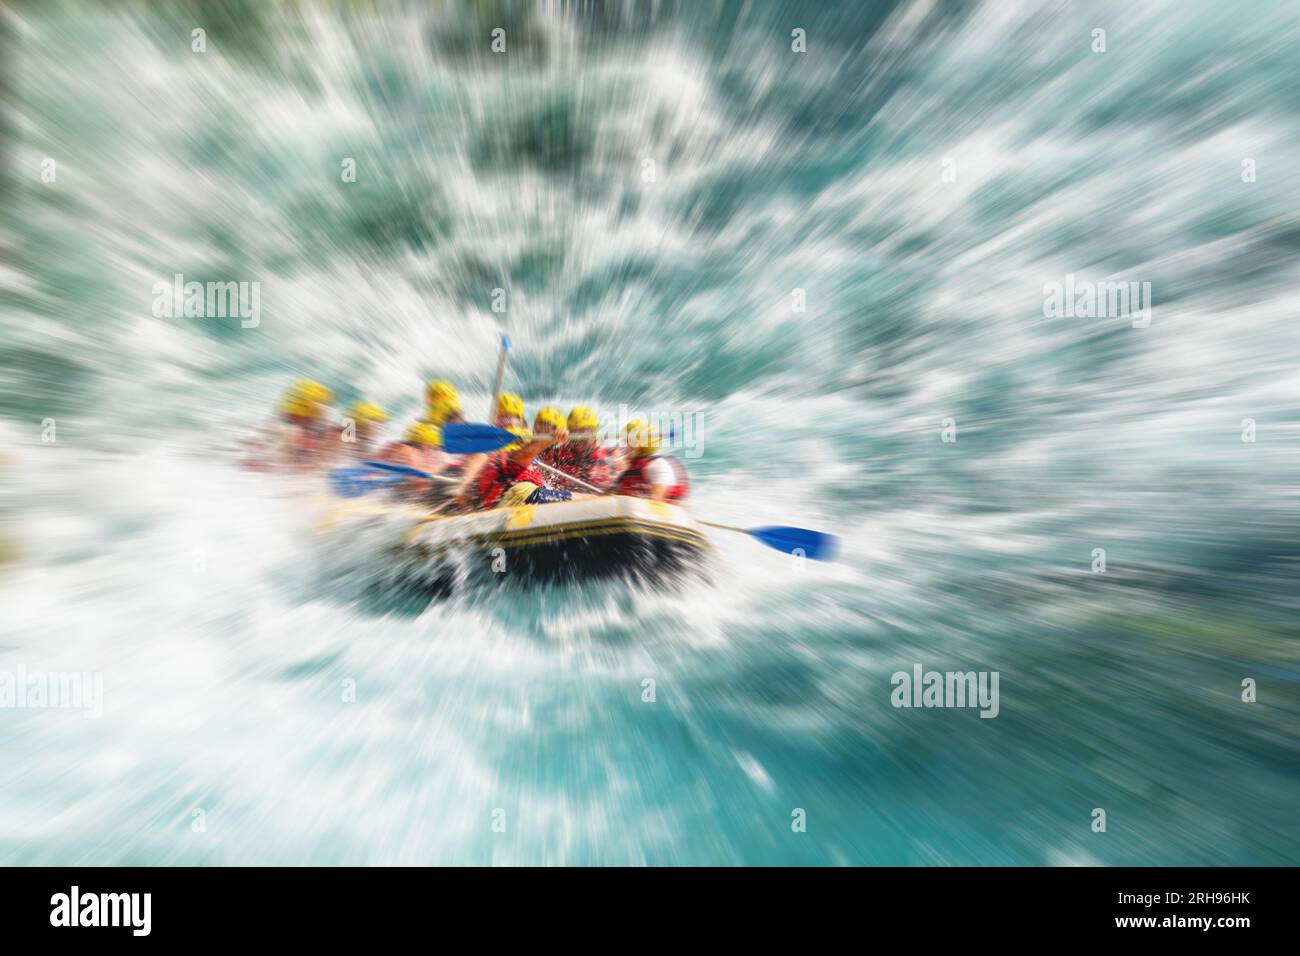 Rafting on a big rafting boat on the river in Antalya Koprulu Canyon Stock Photo